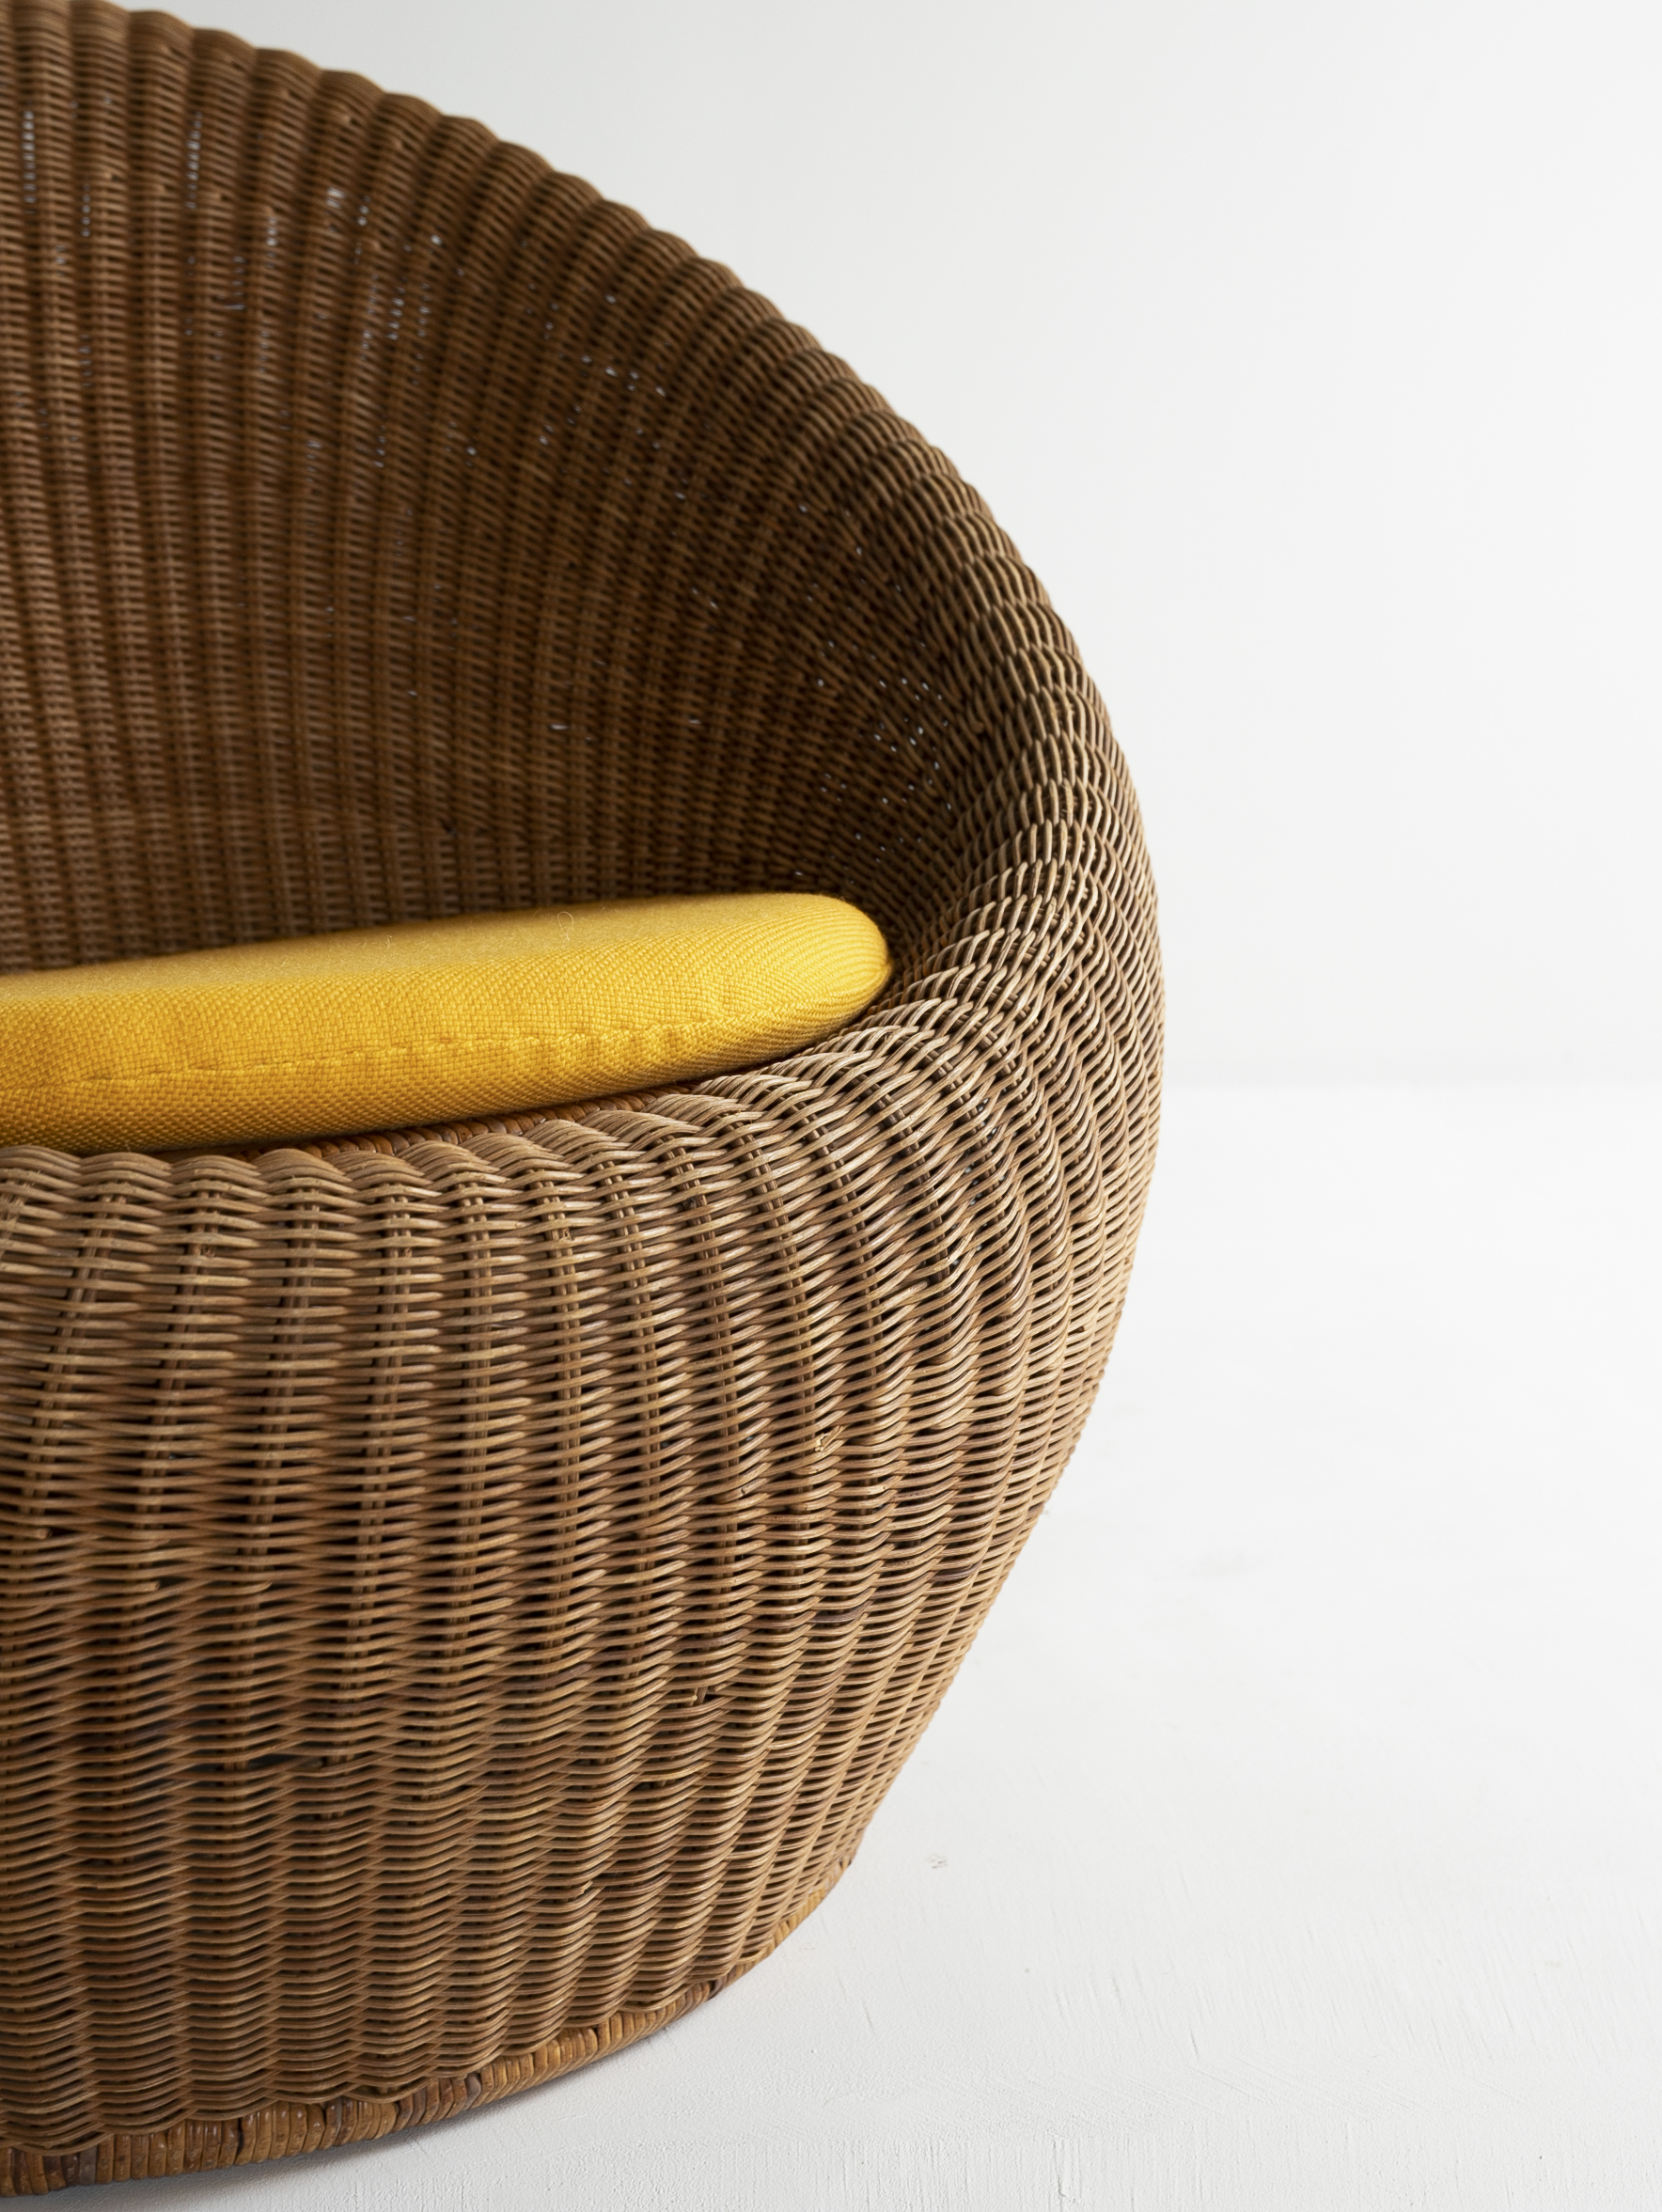 Rattan Lounge Chair by Isamu Kenmochi